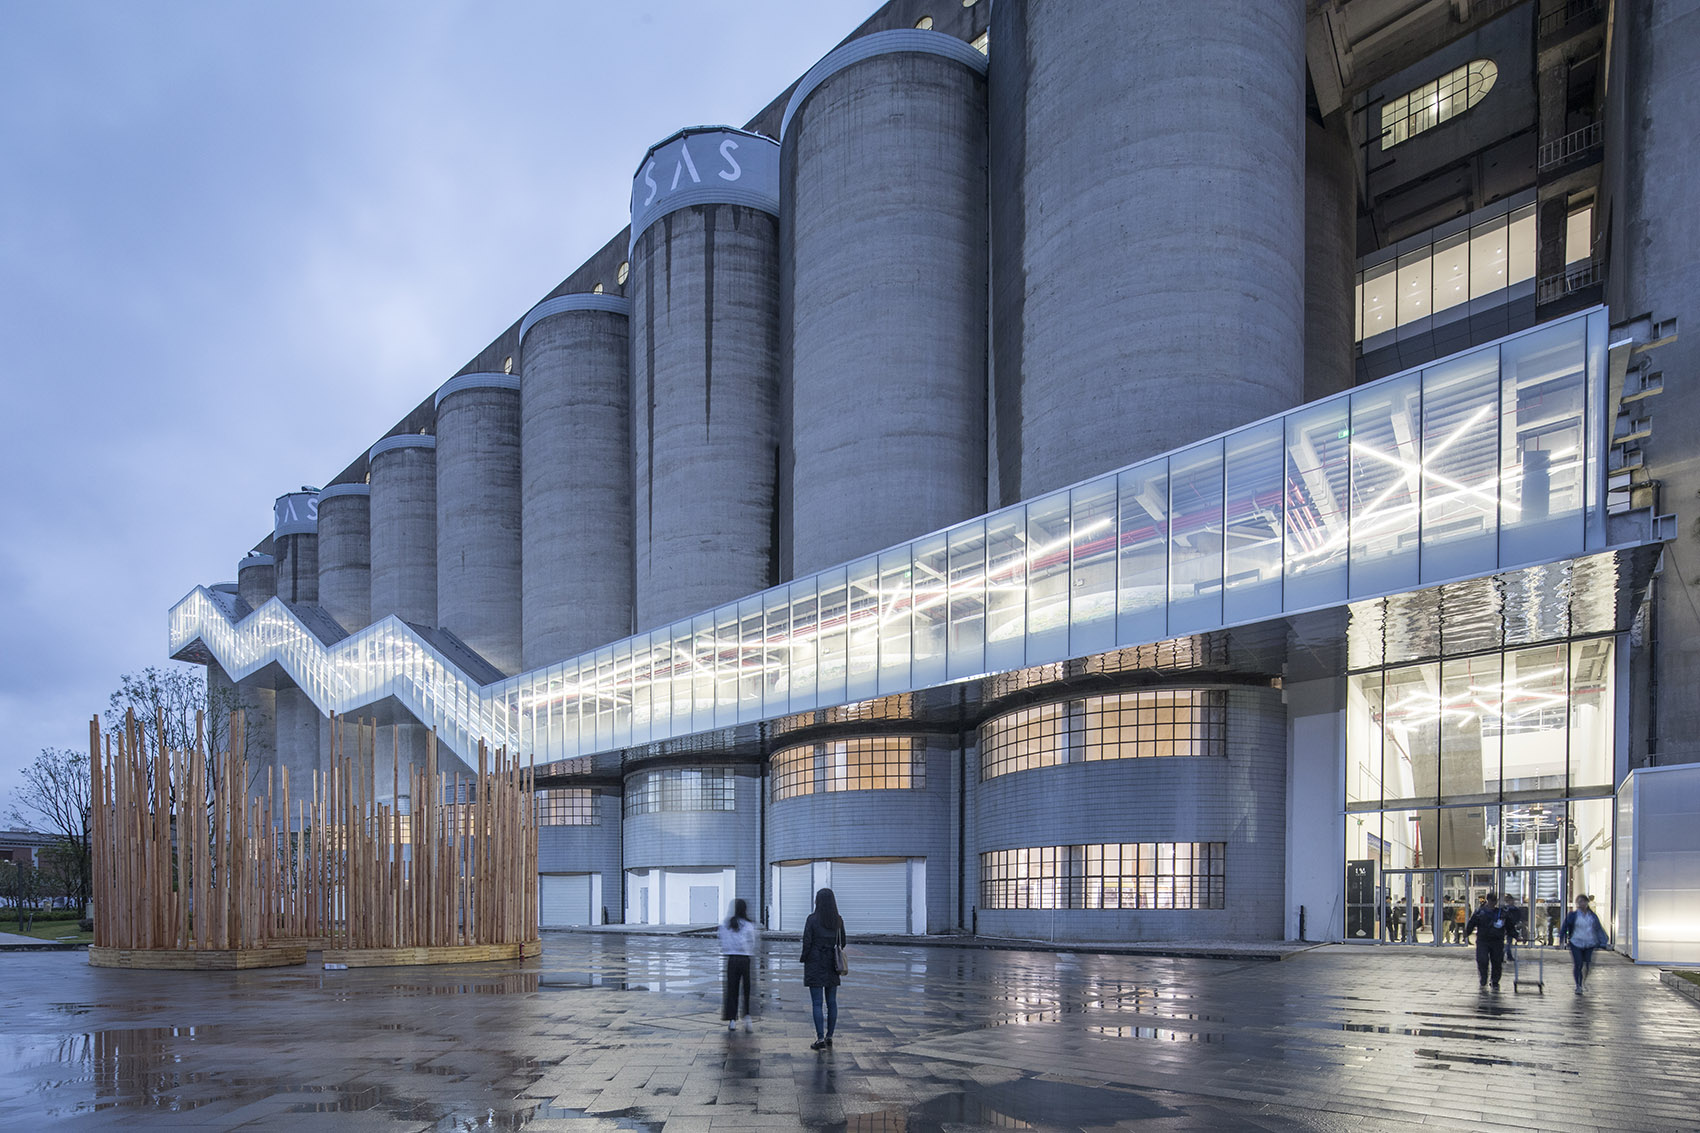 011-renovation-of-80000-ton-silos-on-minsheng-wharf-china-by-atelier-deshaus.jpg